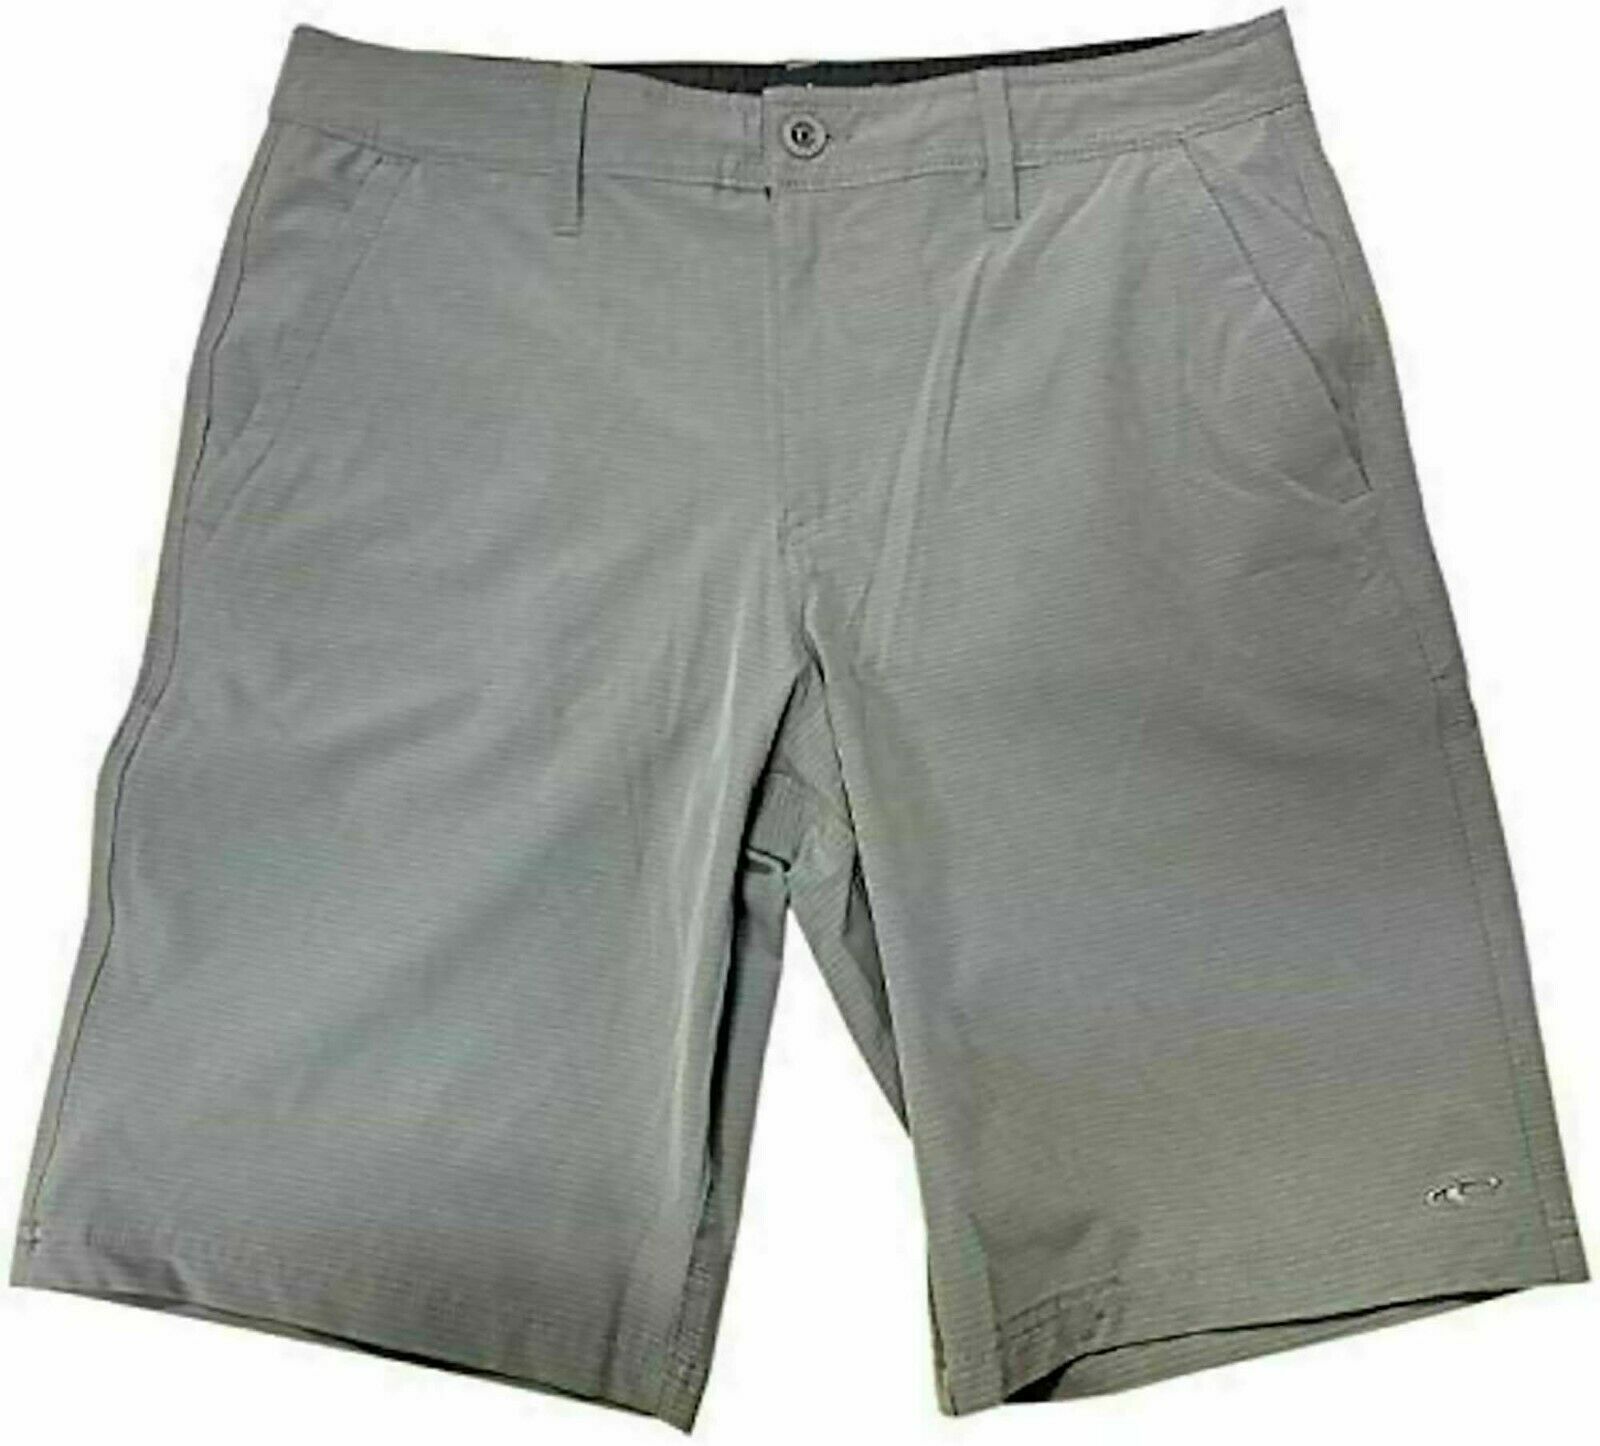 O'Neill Men's Crossover Hybrid Shorts, GRIFFIN, 30 - Men's Clothing